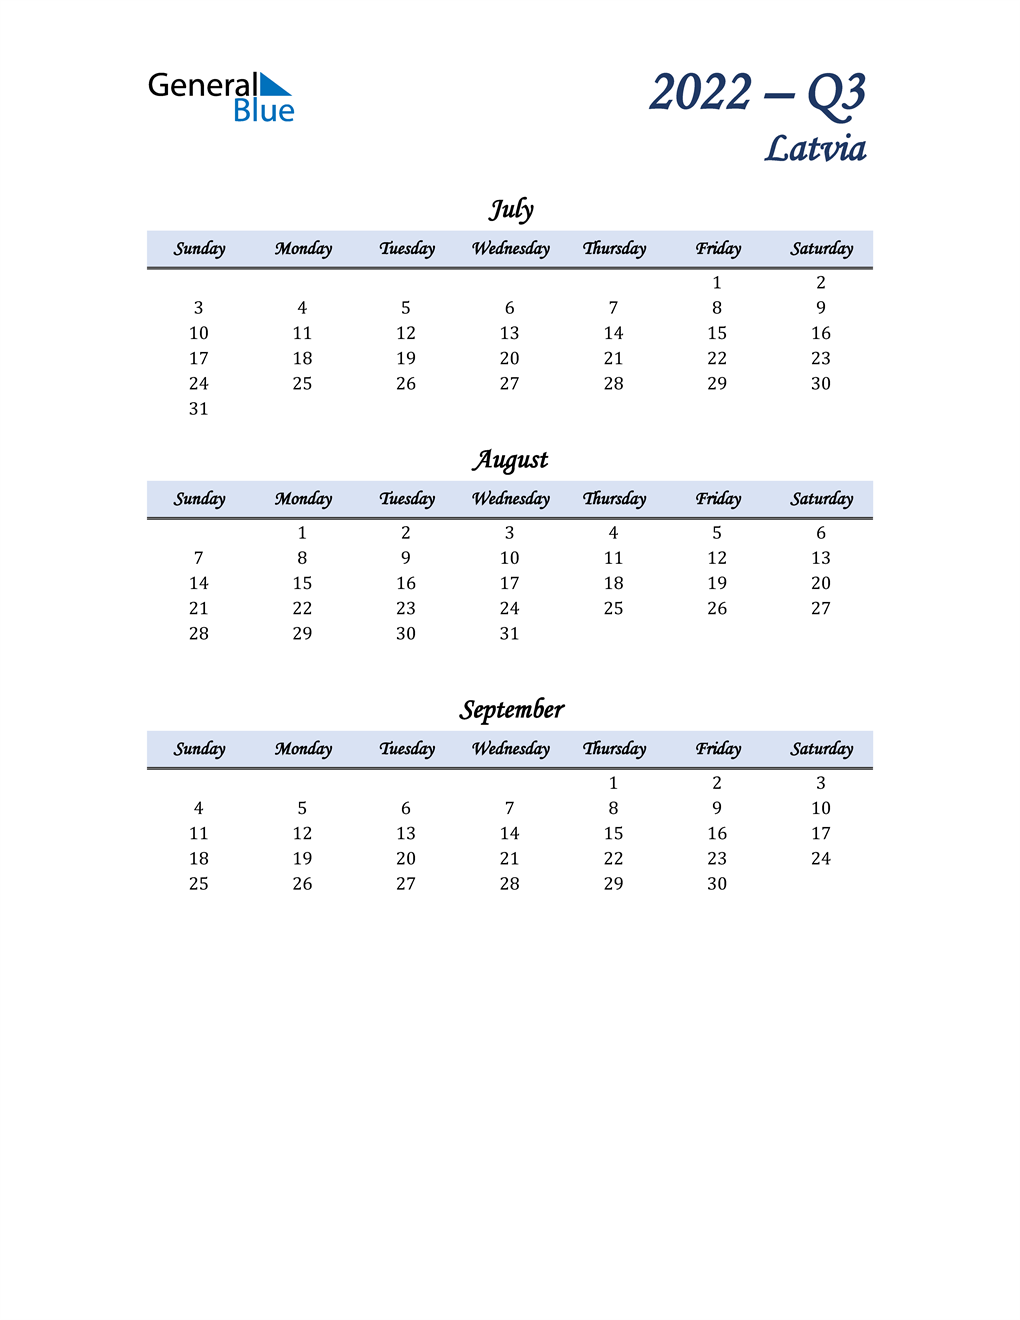  July, August, and September Calendar for Latvia